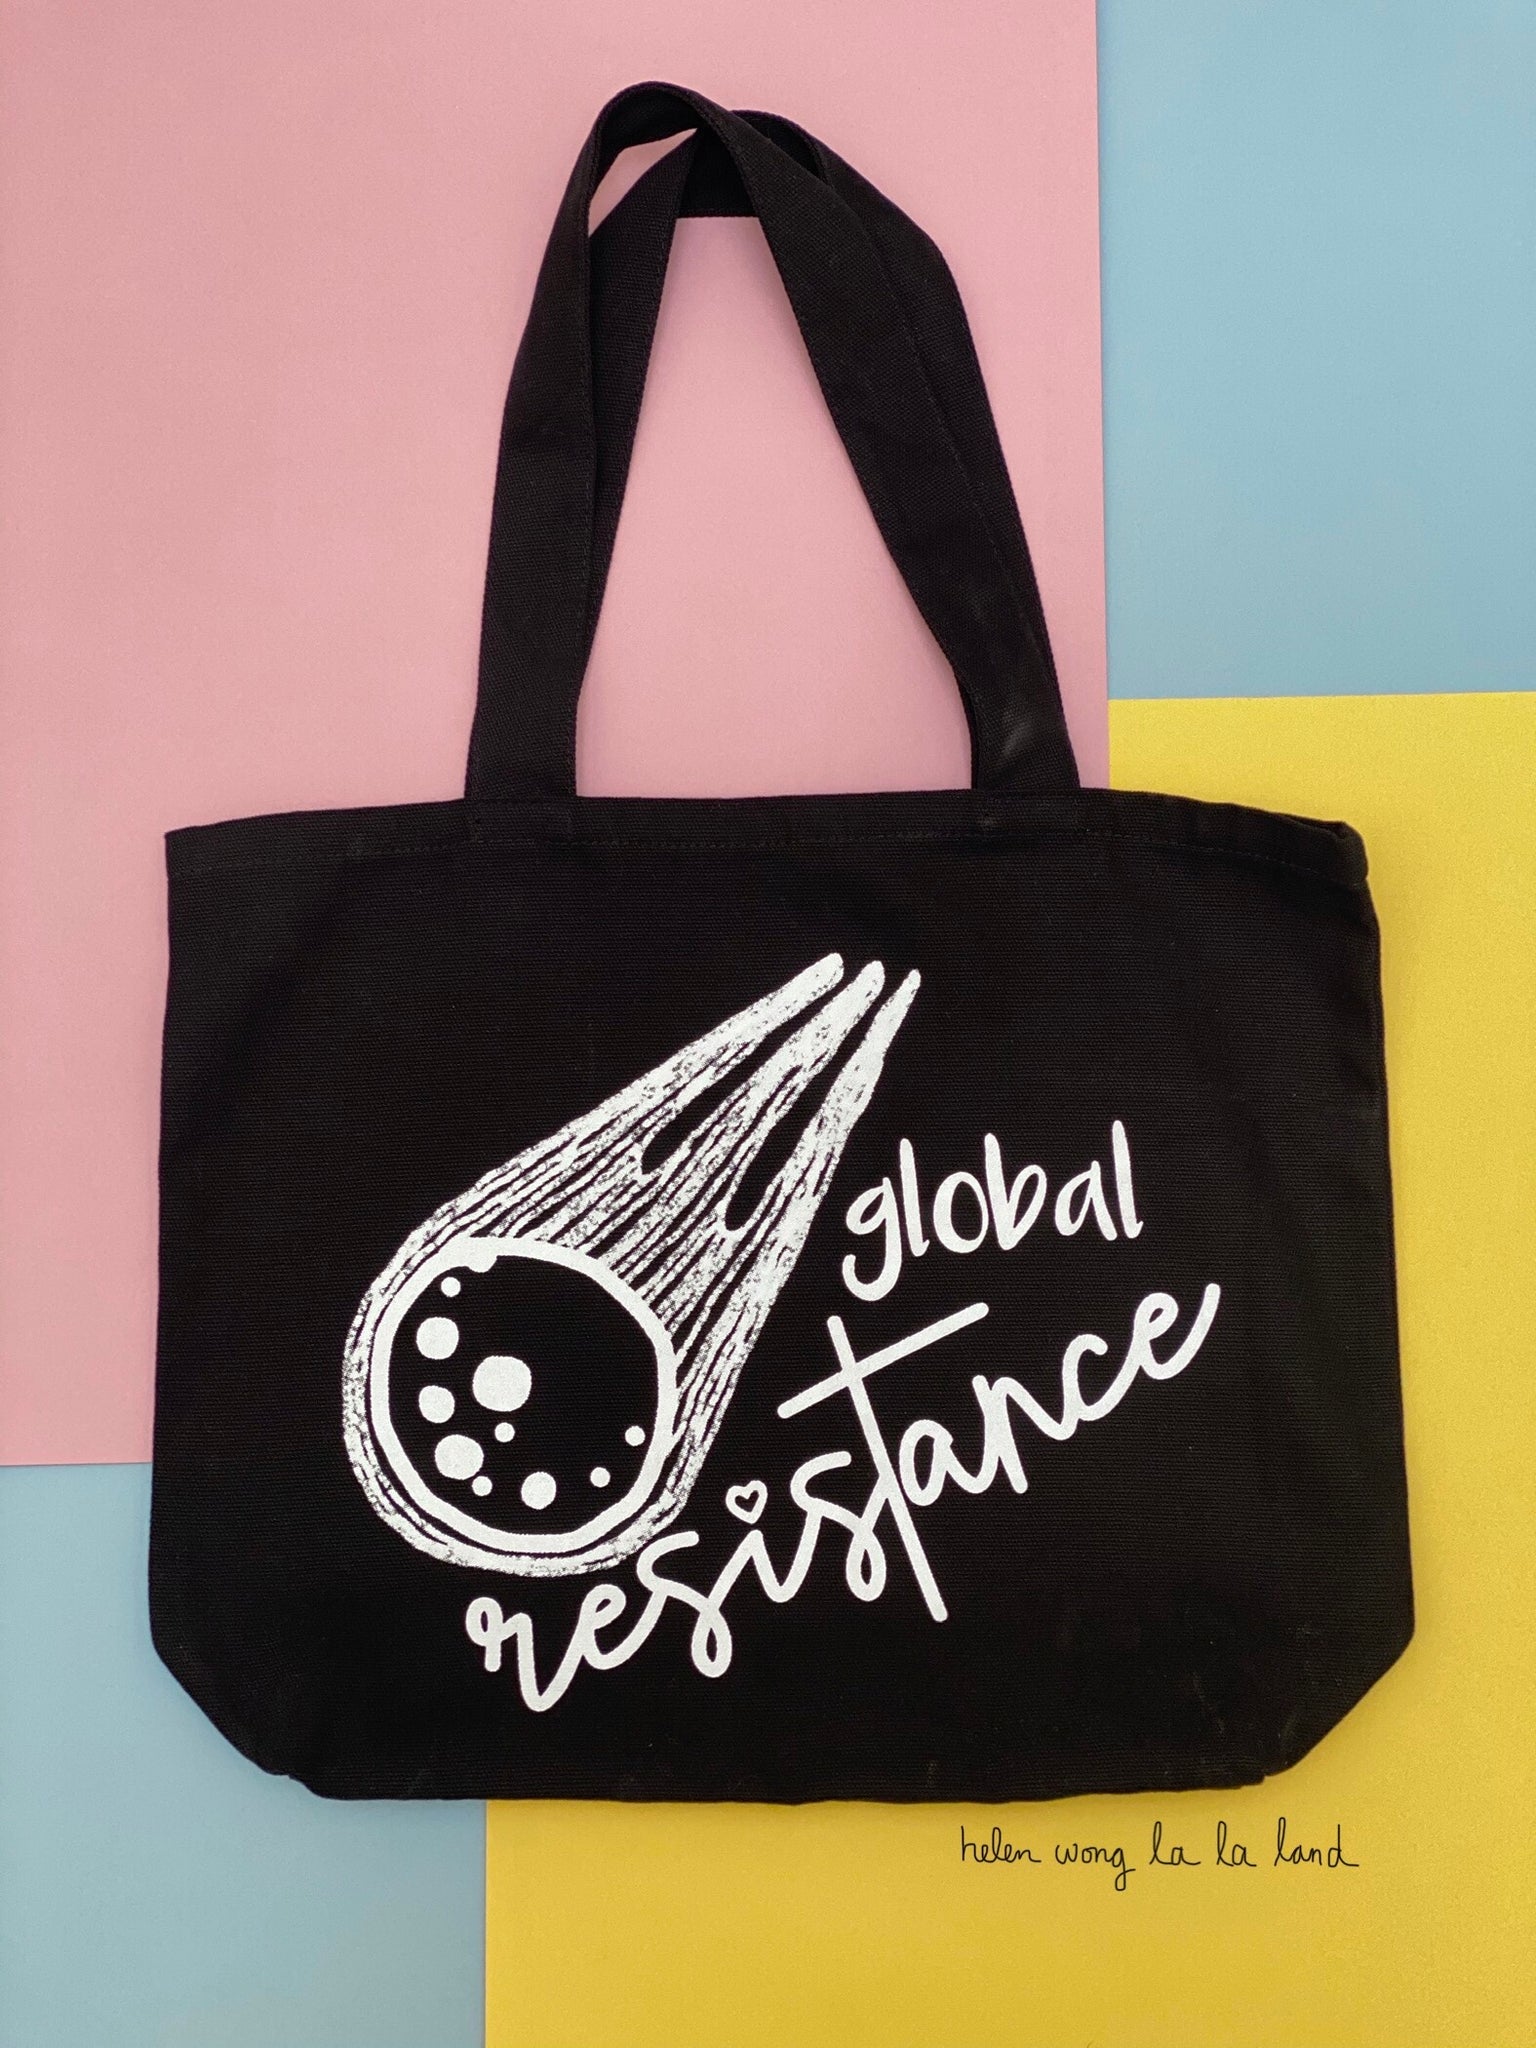 (S/S 2020) Global Resistance shoulder tote in BLACK